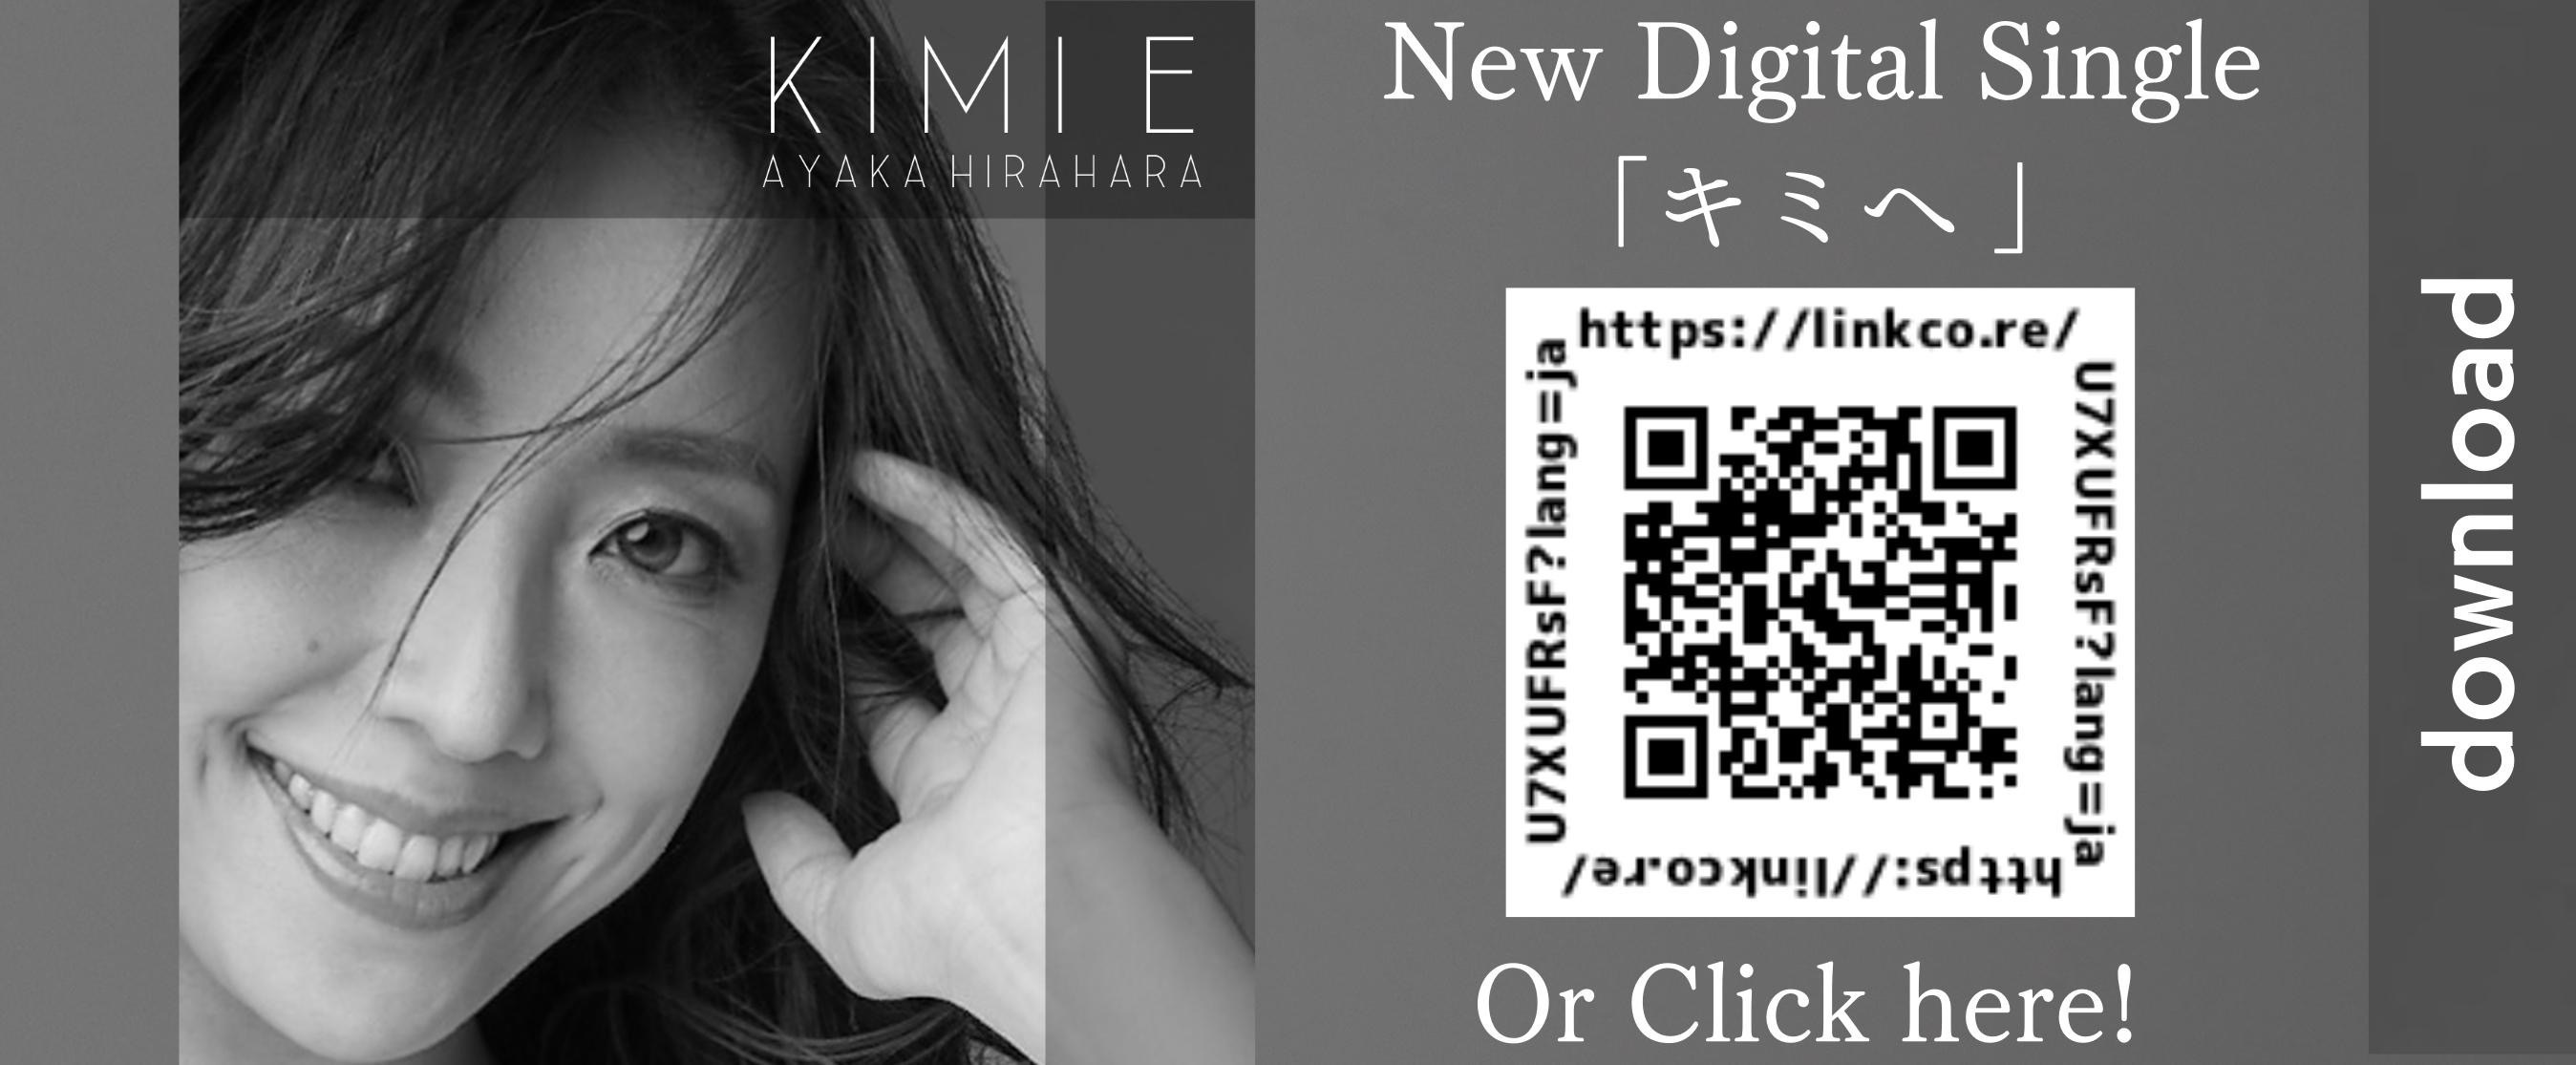 New Digital Single「キミへ」